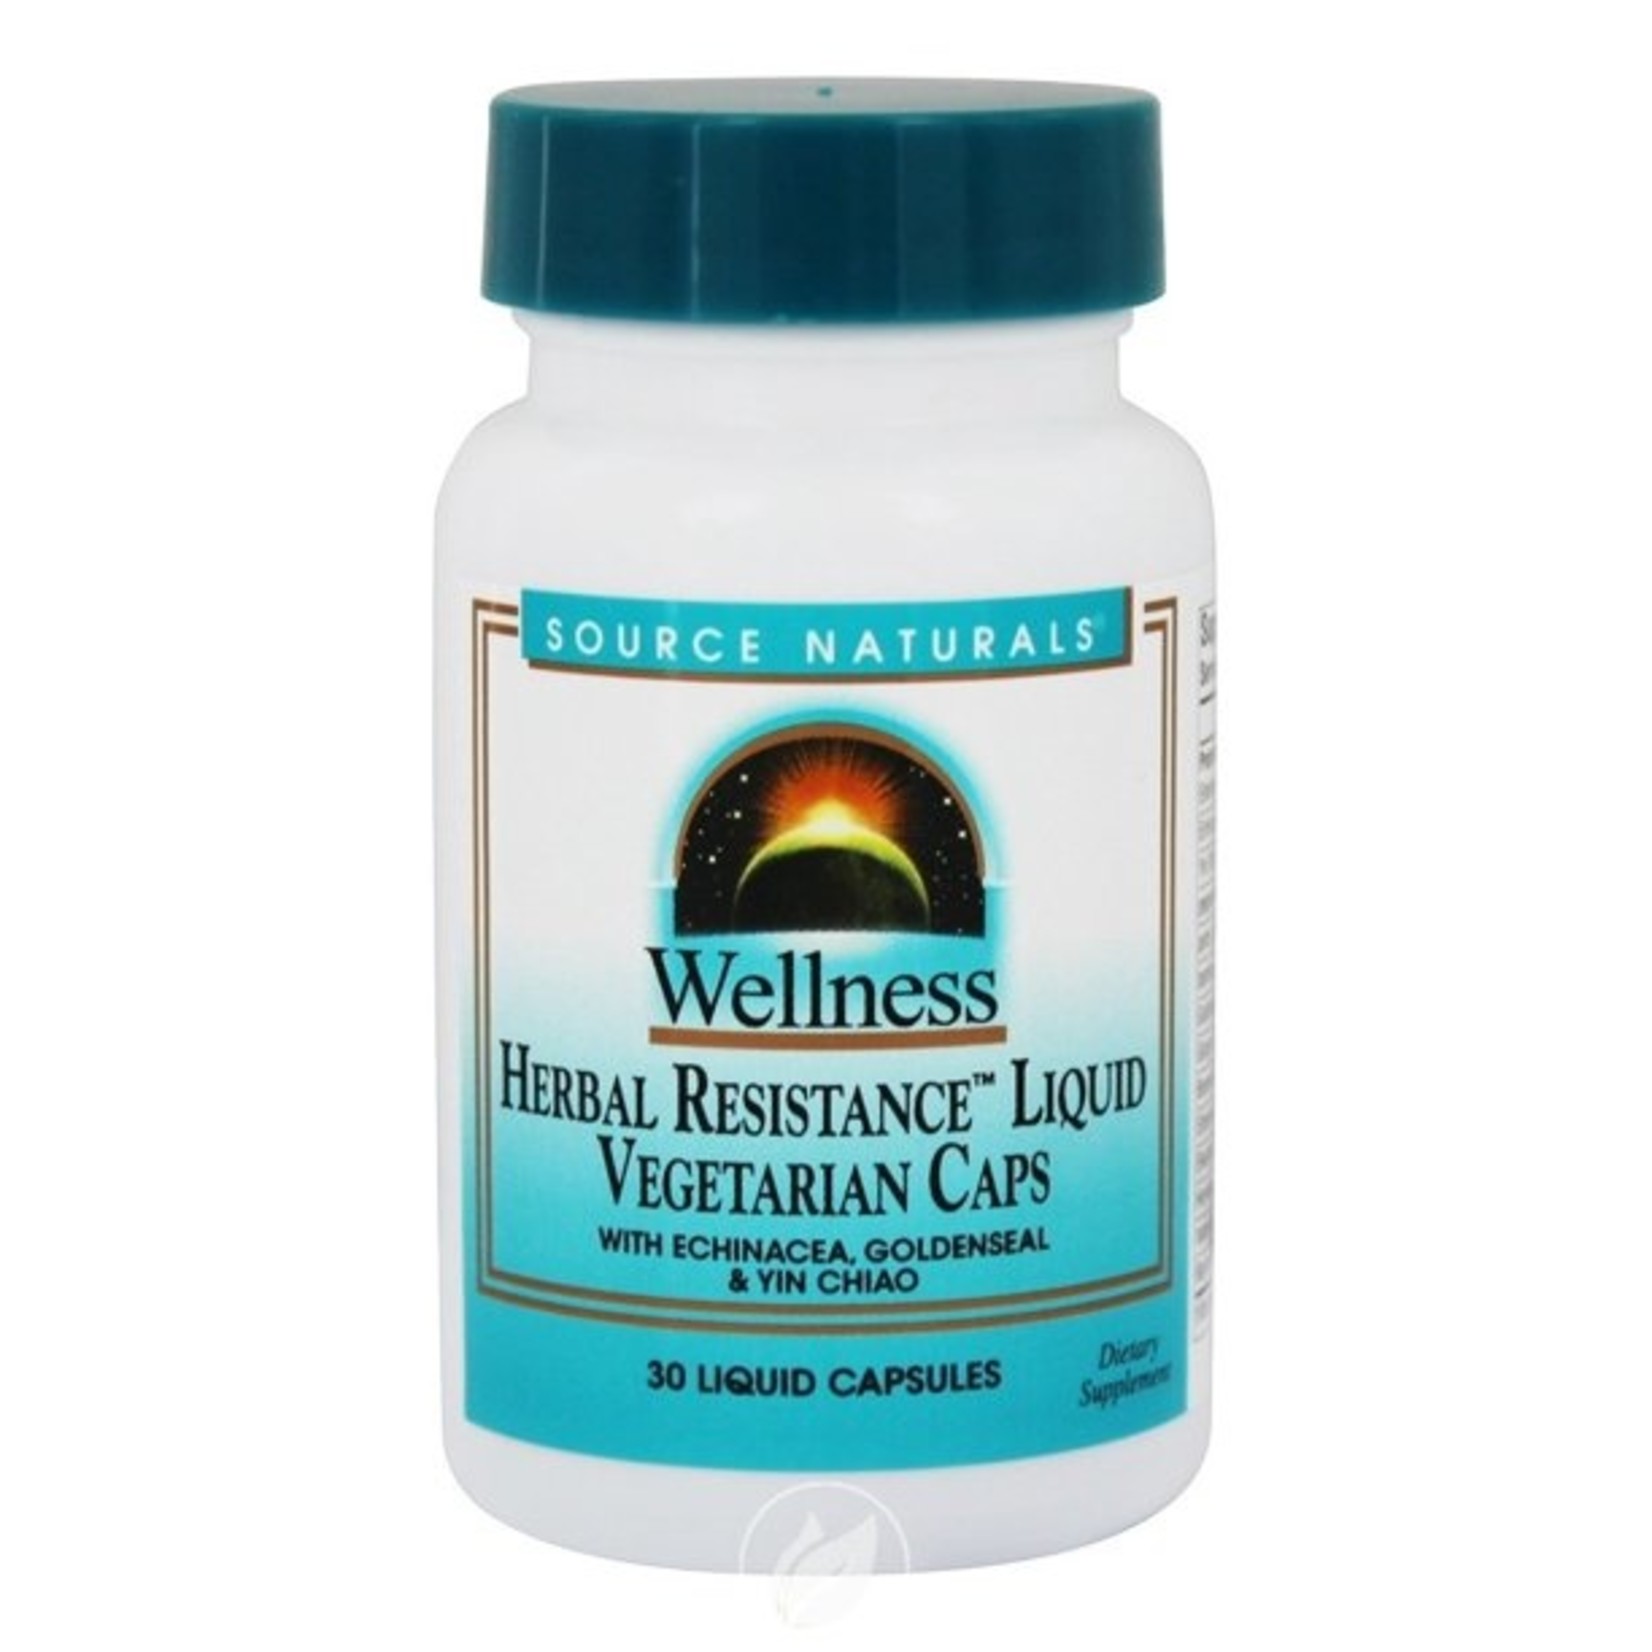 Source Naturals Source Naturals - Wellness Herbal Resistance - 30 Liquid Capsules